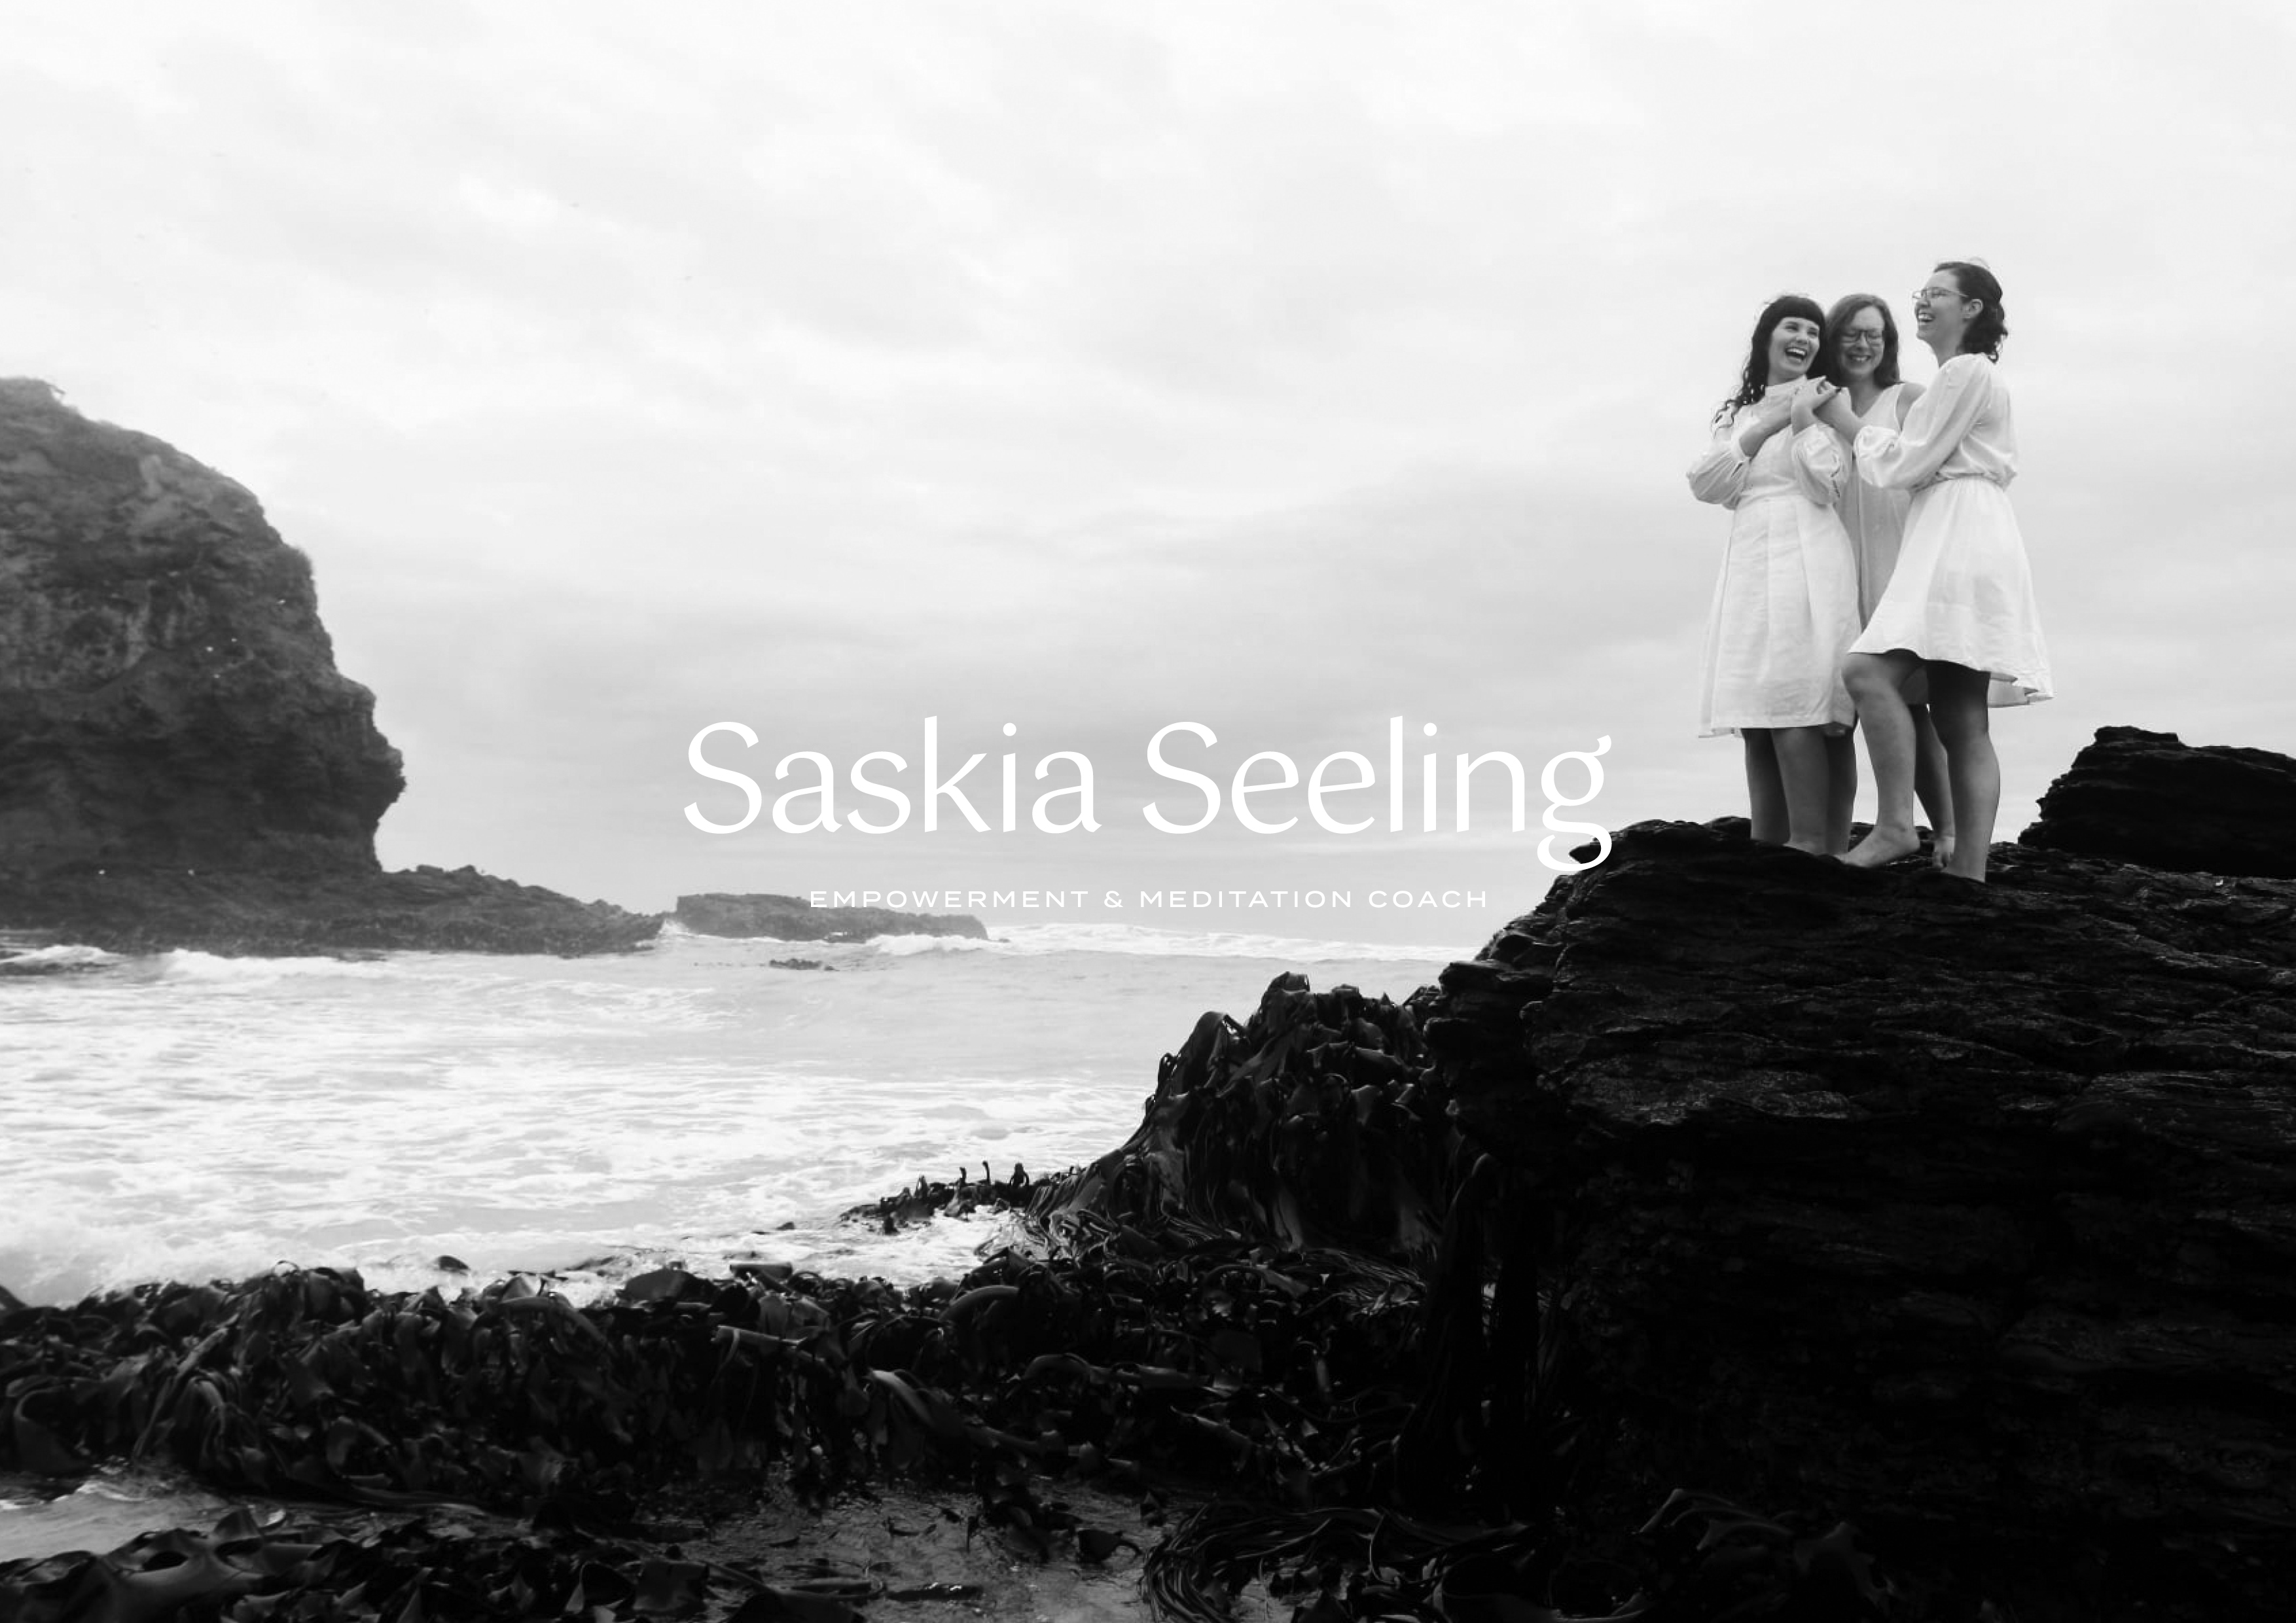 Saskia Seeling